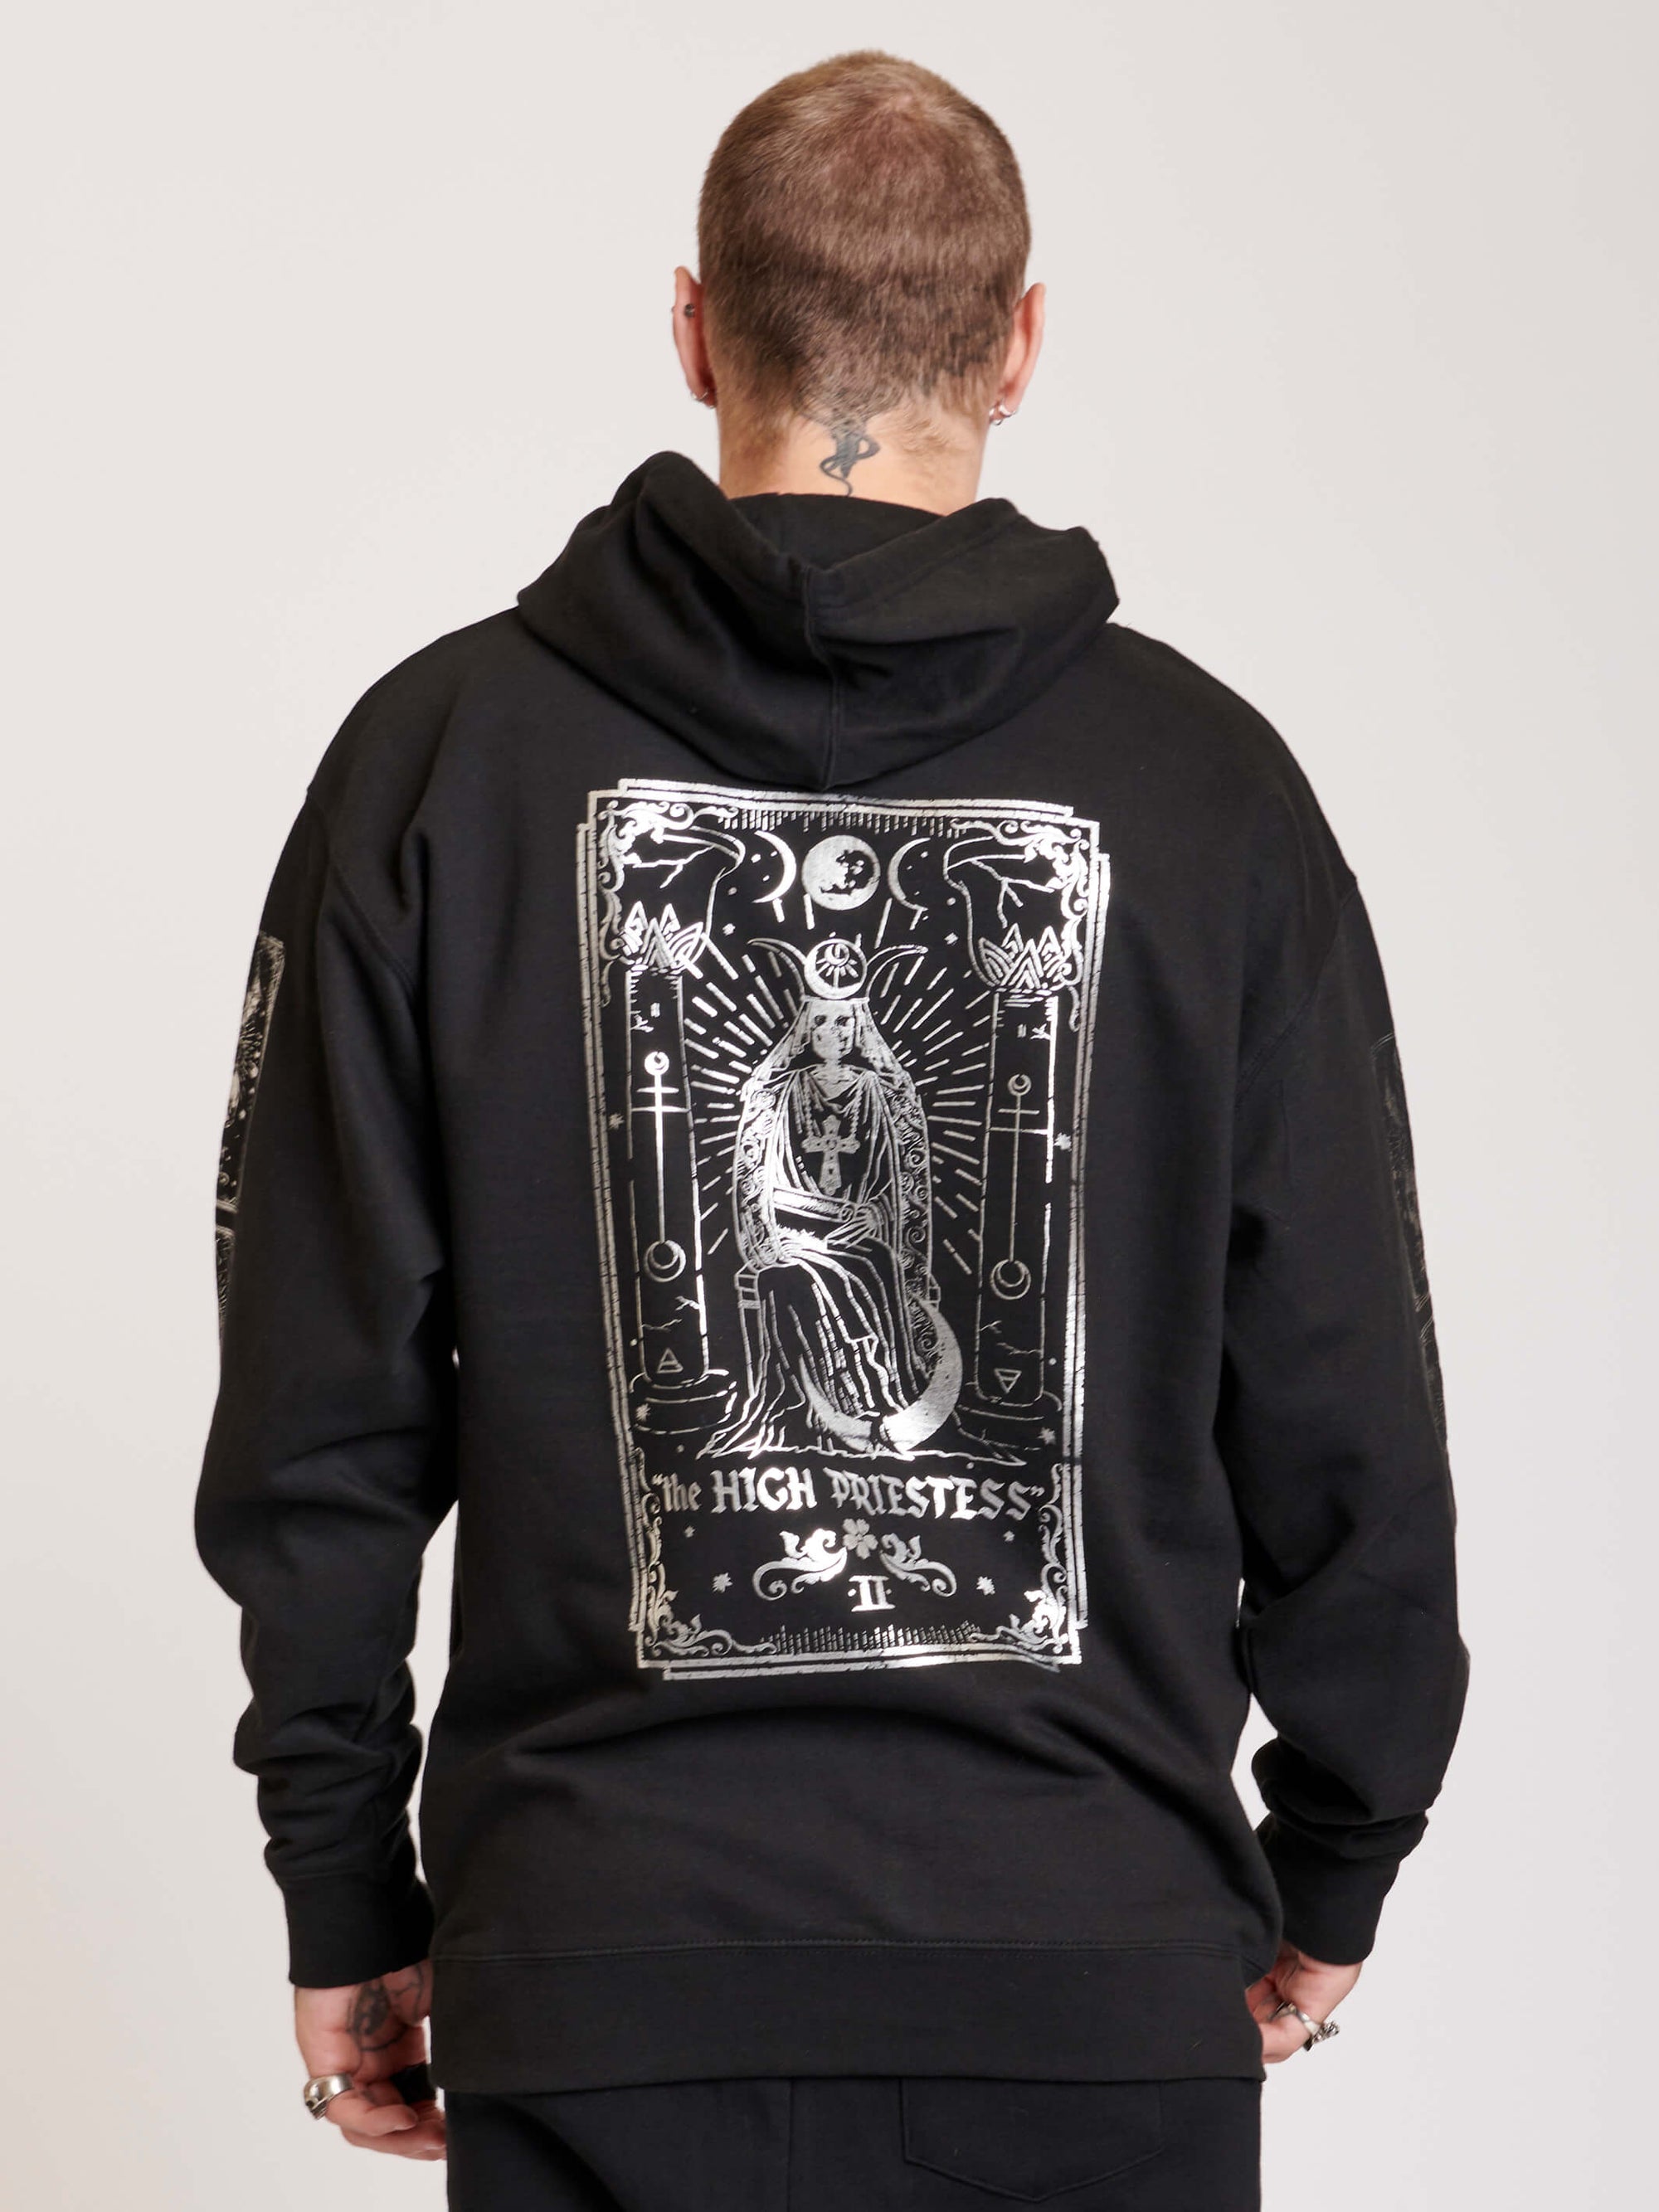 High Priestess silver foil hoodie